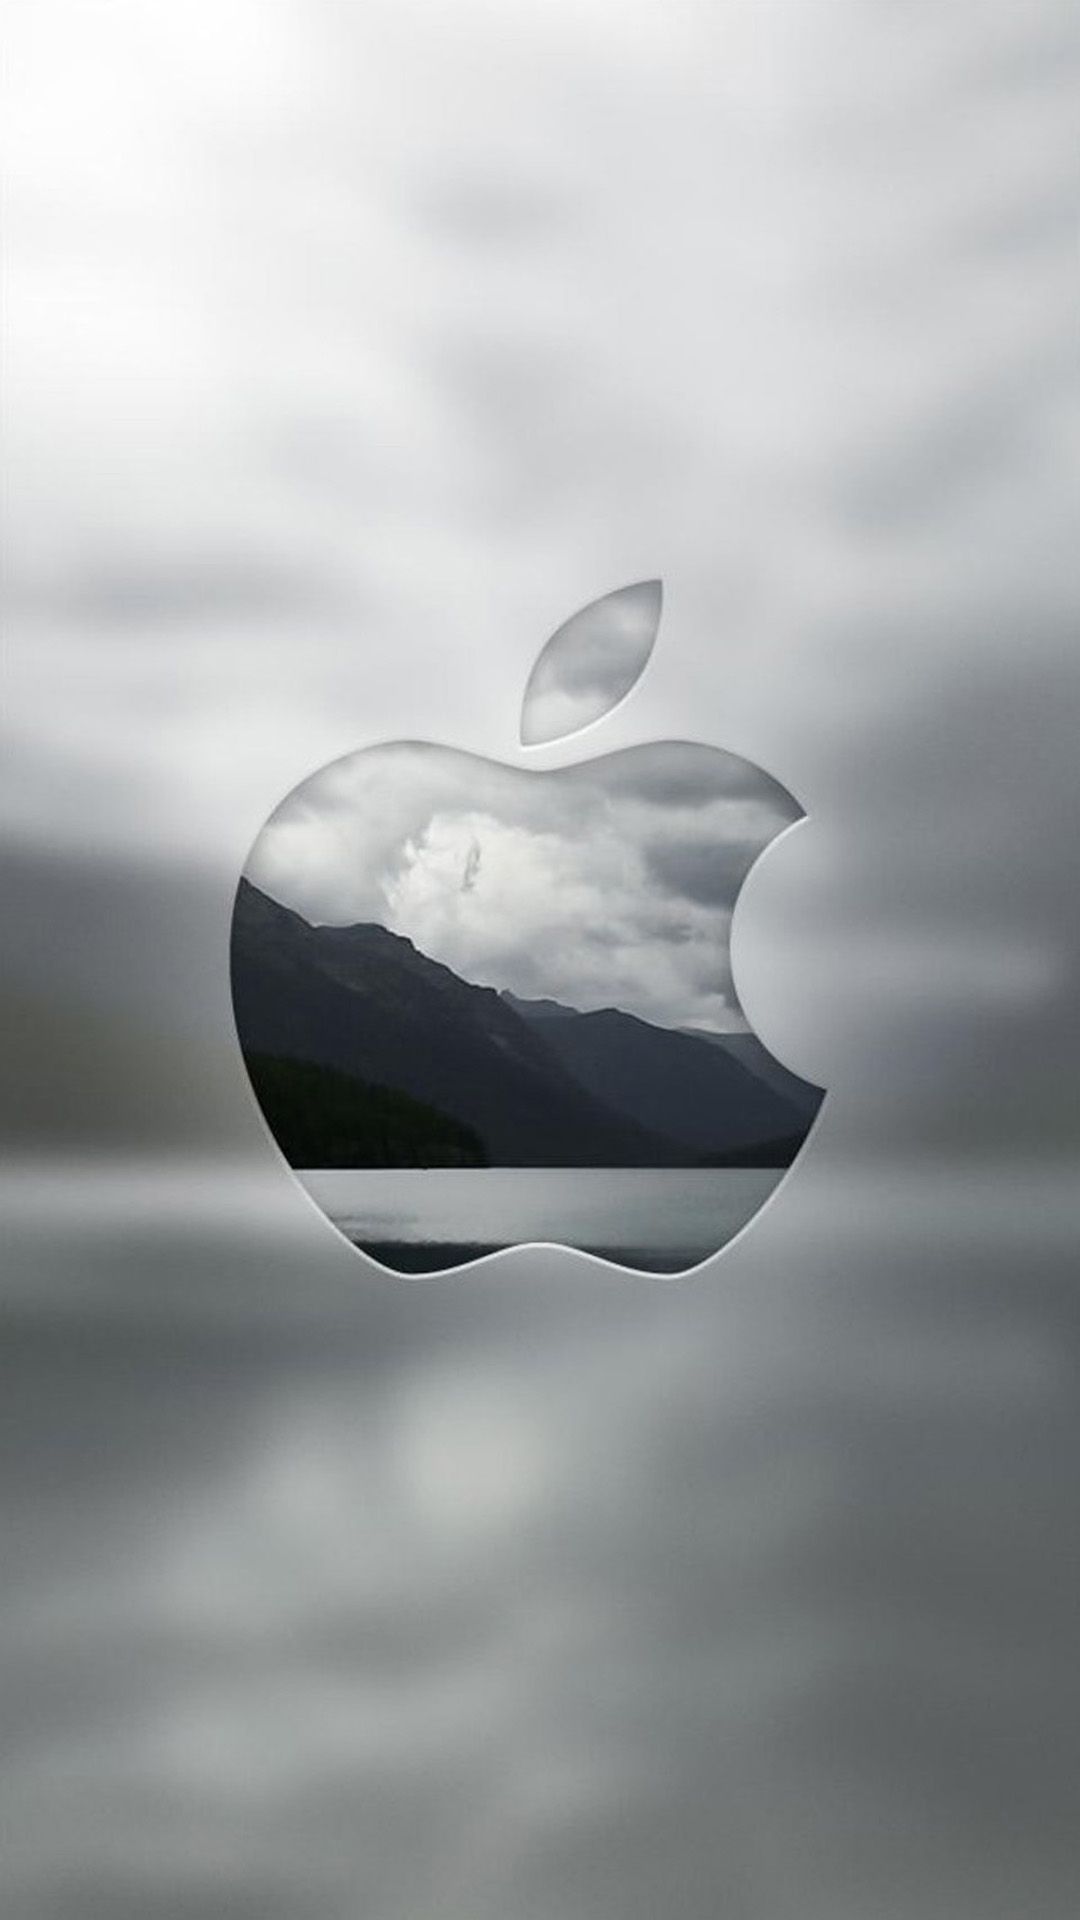 Monotone Apple. Take a look at. Apple wallpaper iphone, iPhone wallpaper, Apple wallpaper